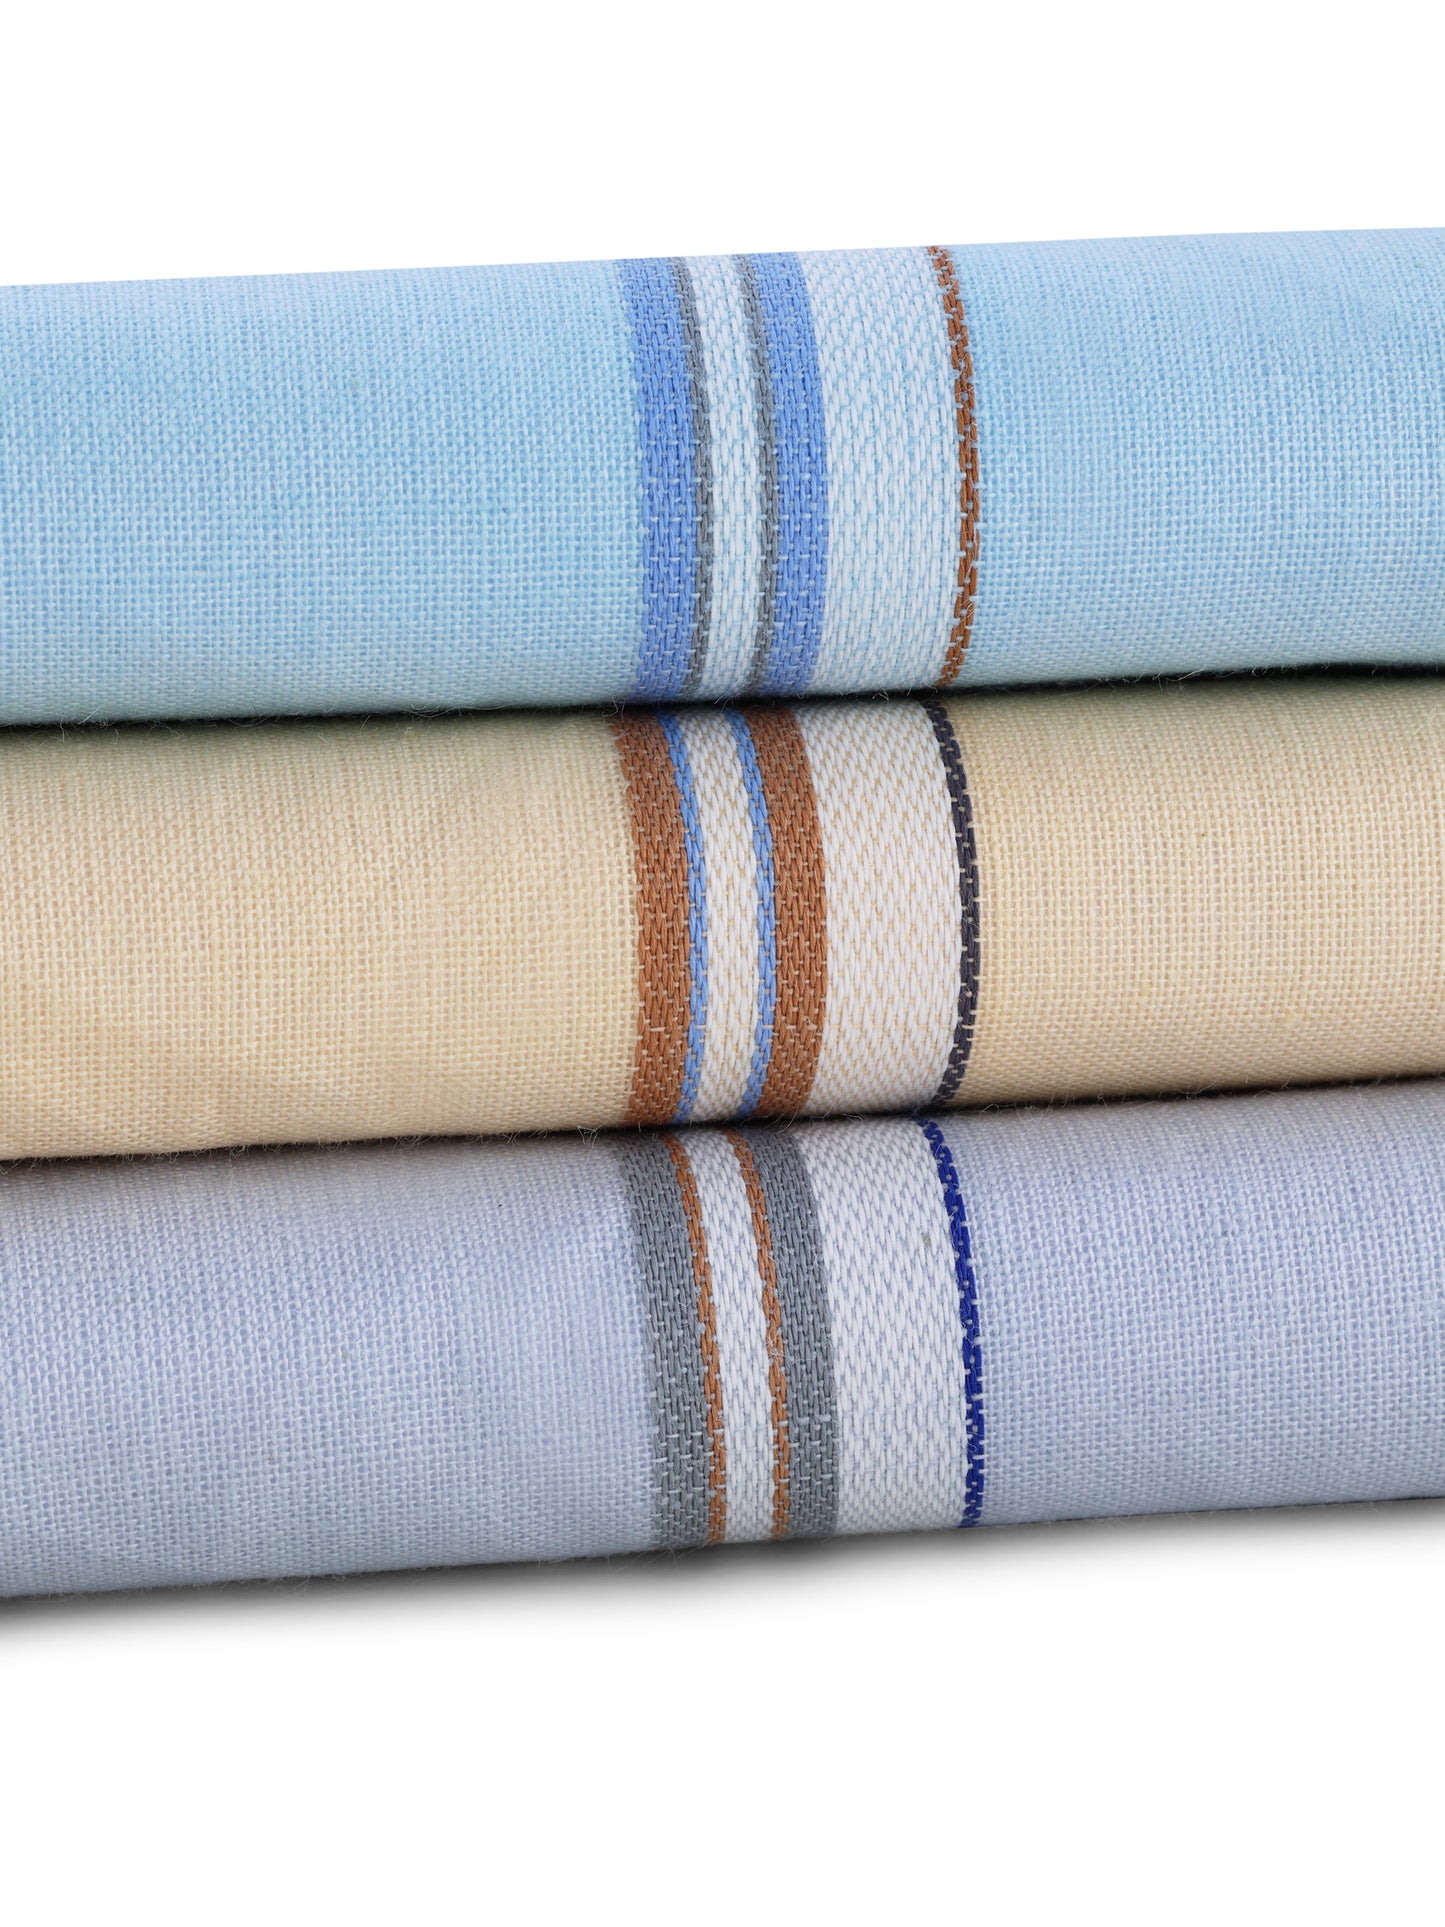 Alvaro Castagnino Men's Cotton White::Multi Color 3 Pcs Set Handkerchief